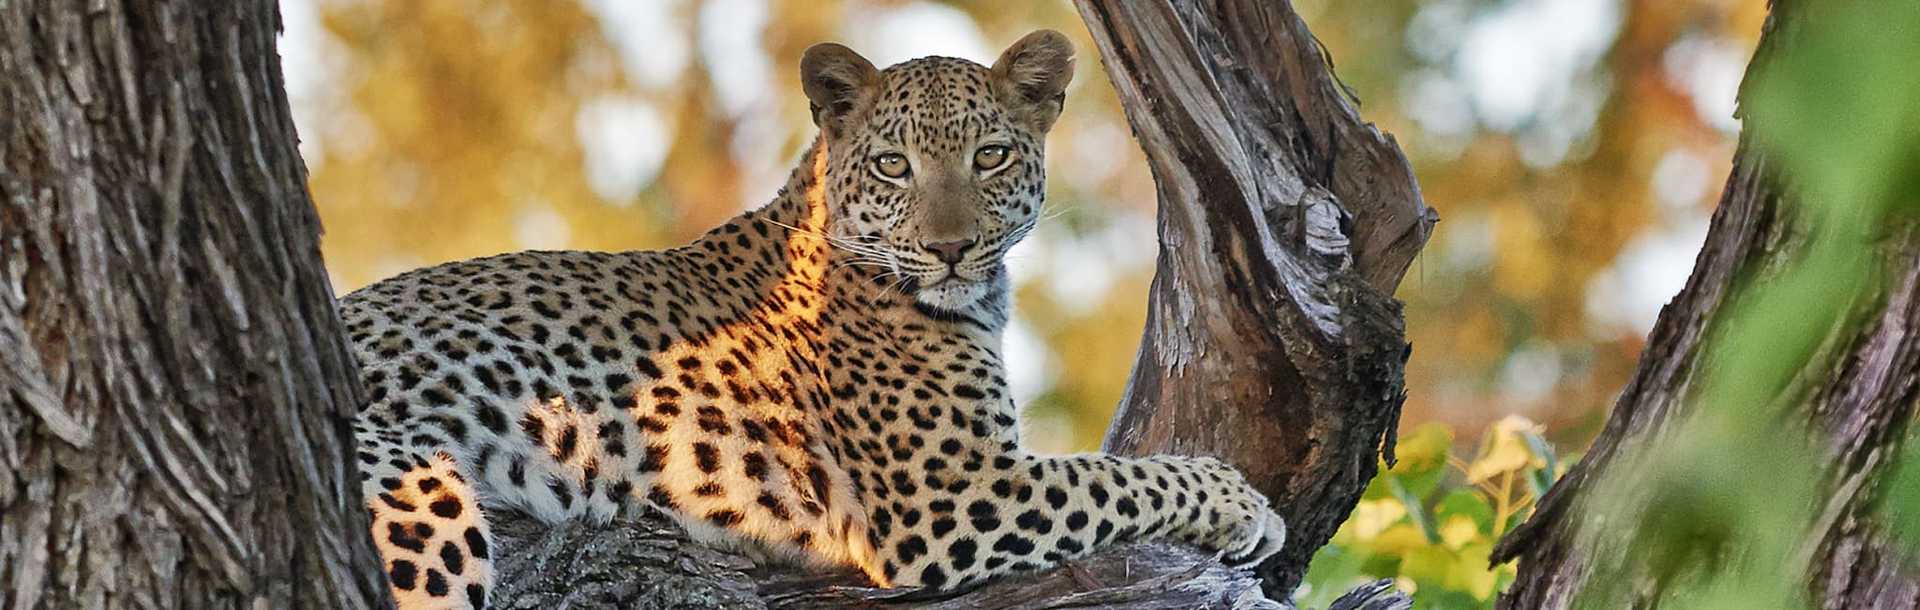 Leopard lounging in a tree in the Okavango Delta